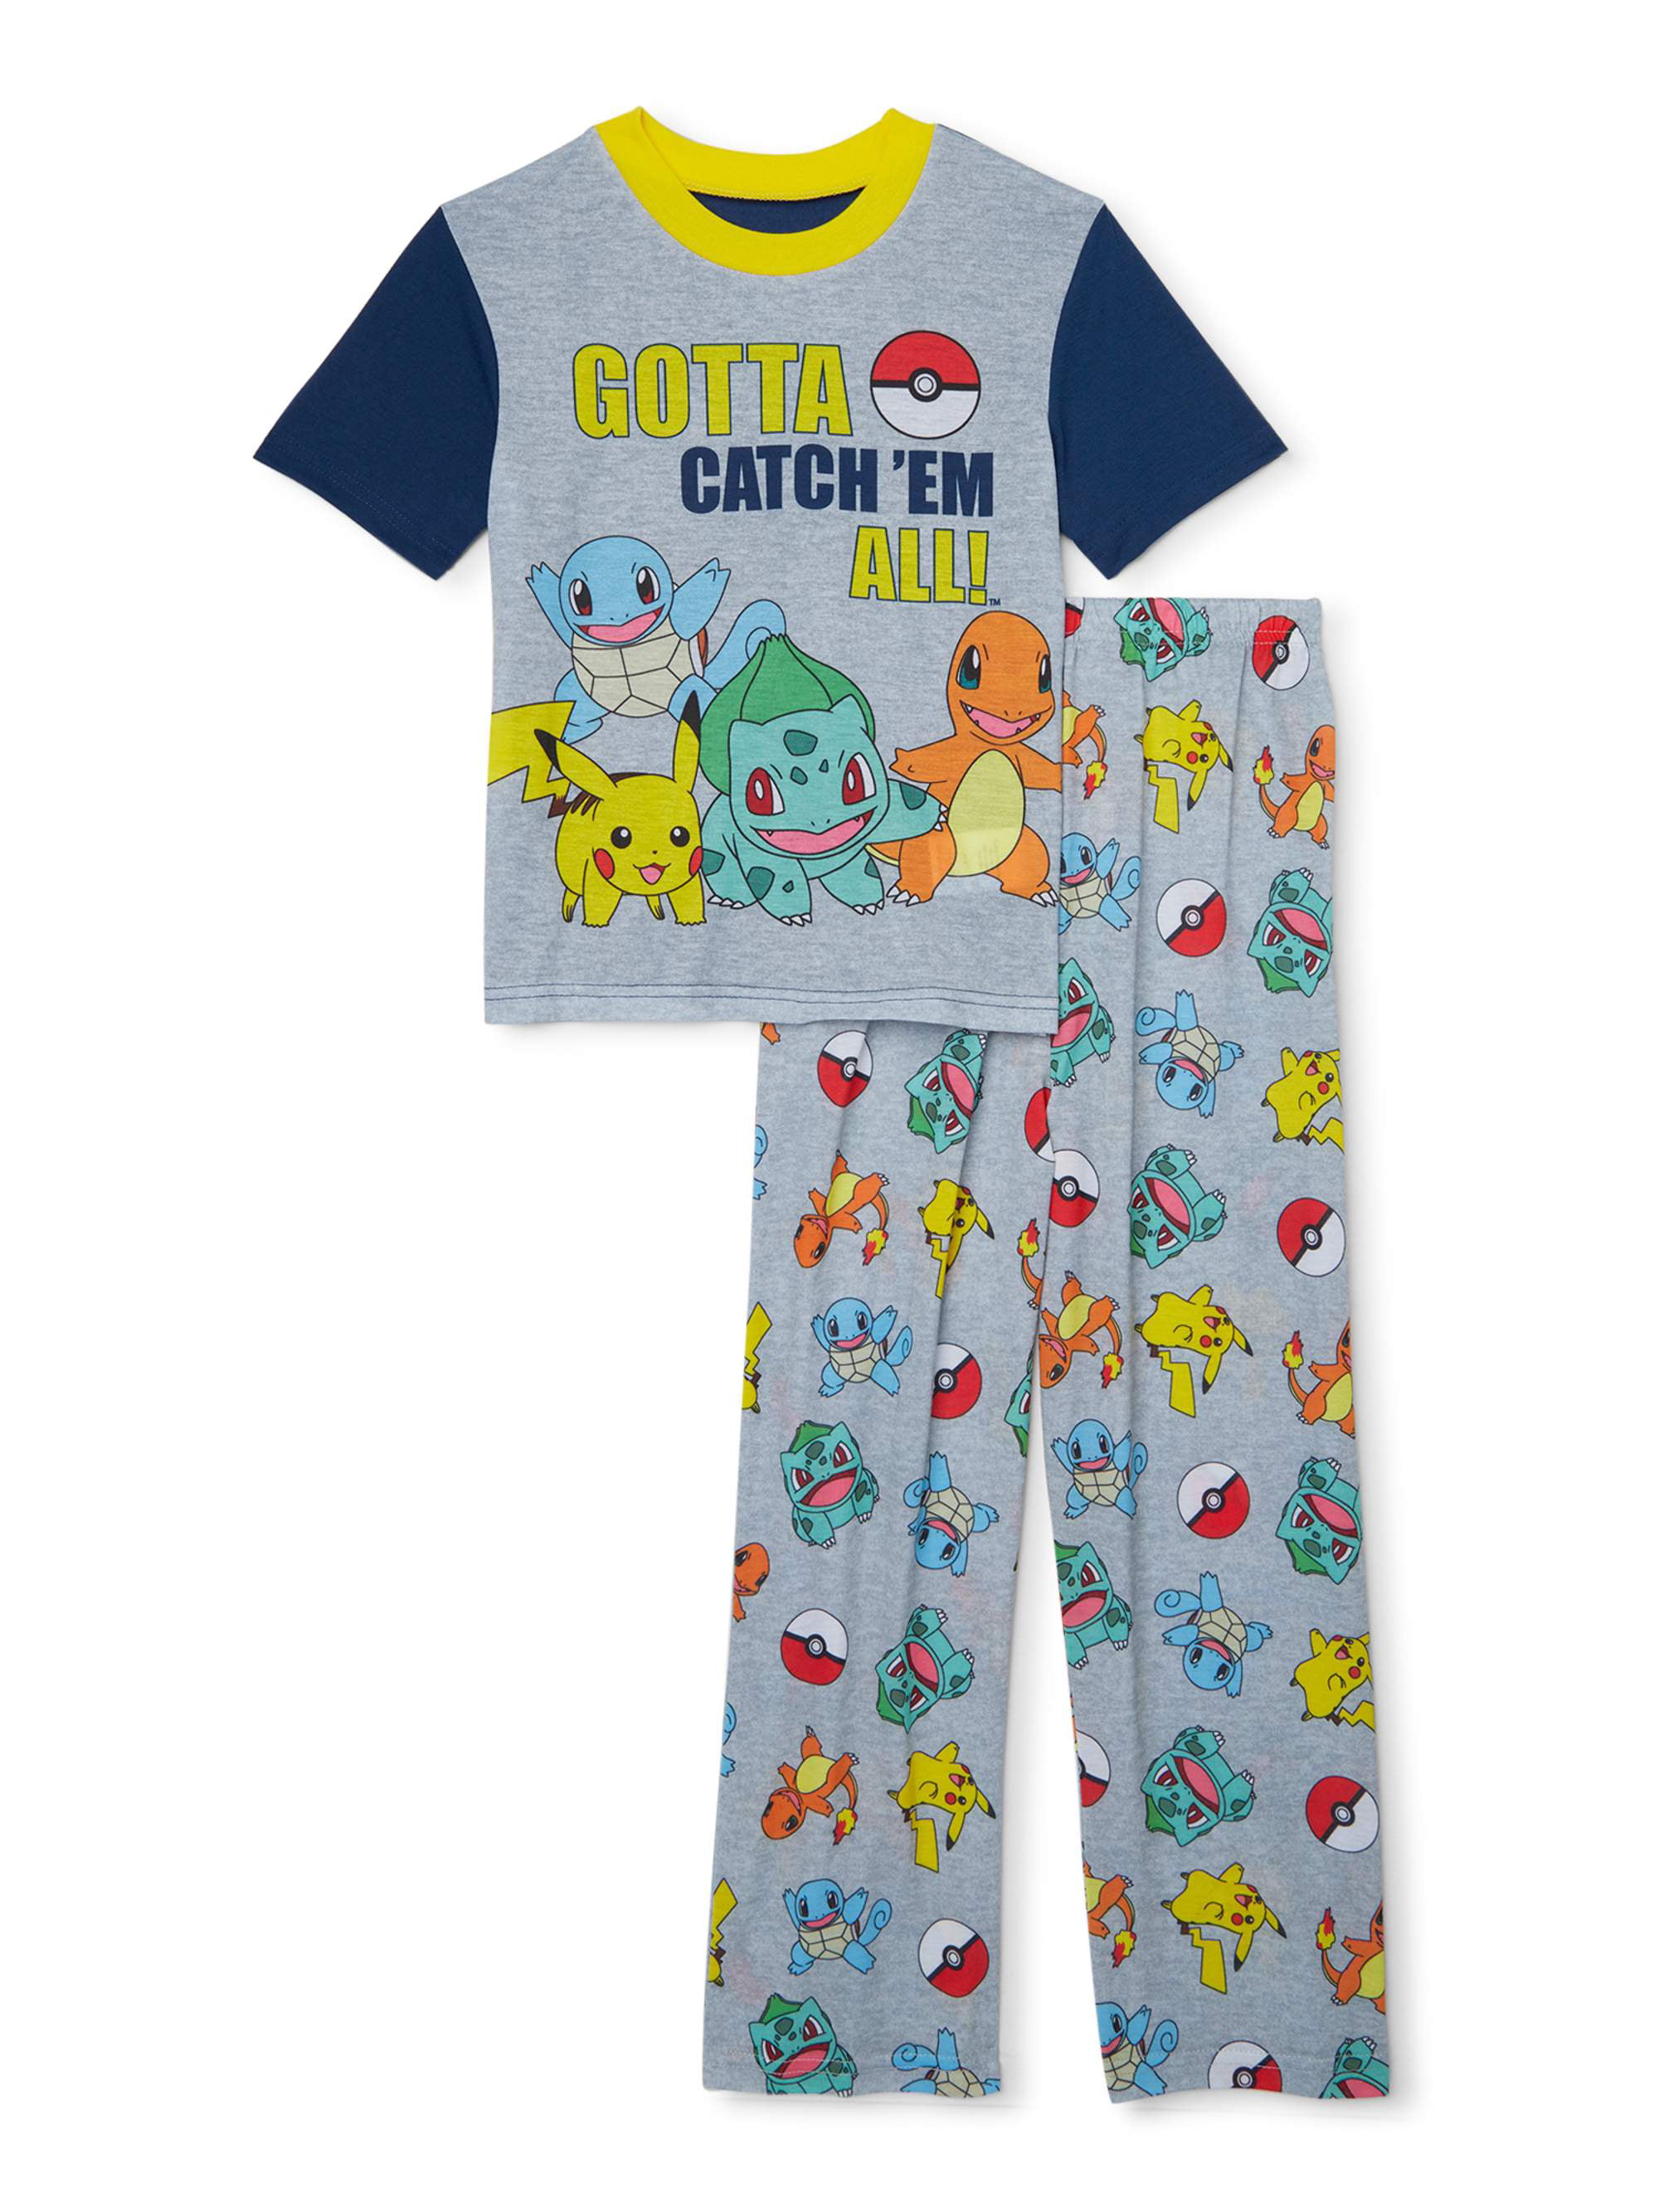 New Kids Short Sleeve Clothing Set Cartoon Pokemon Pajamas light weight 